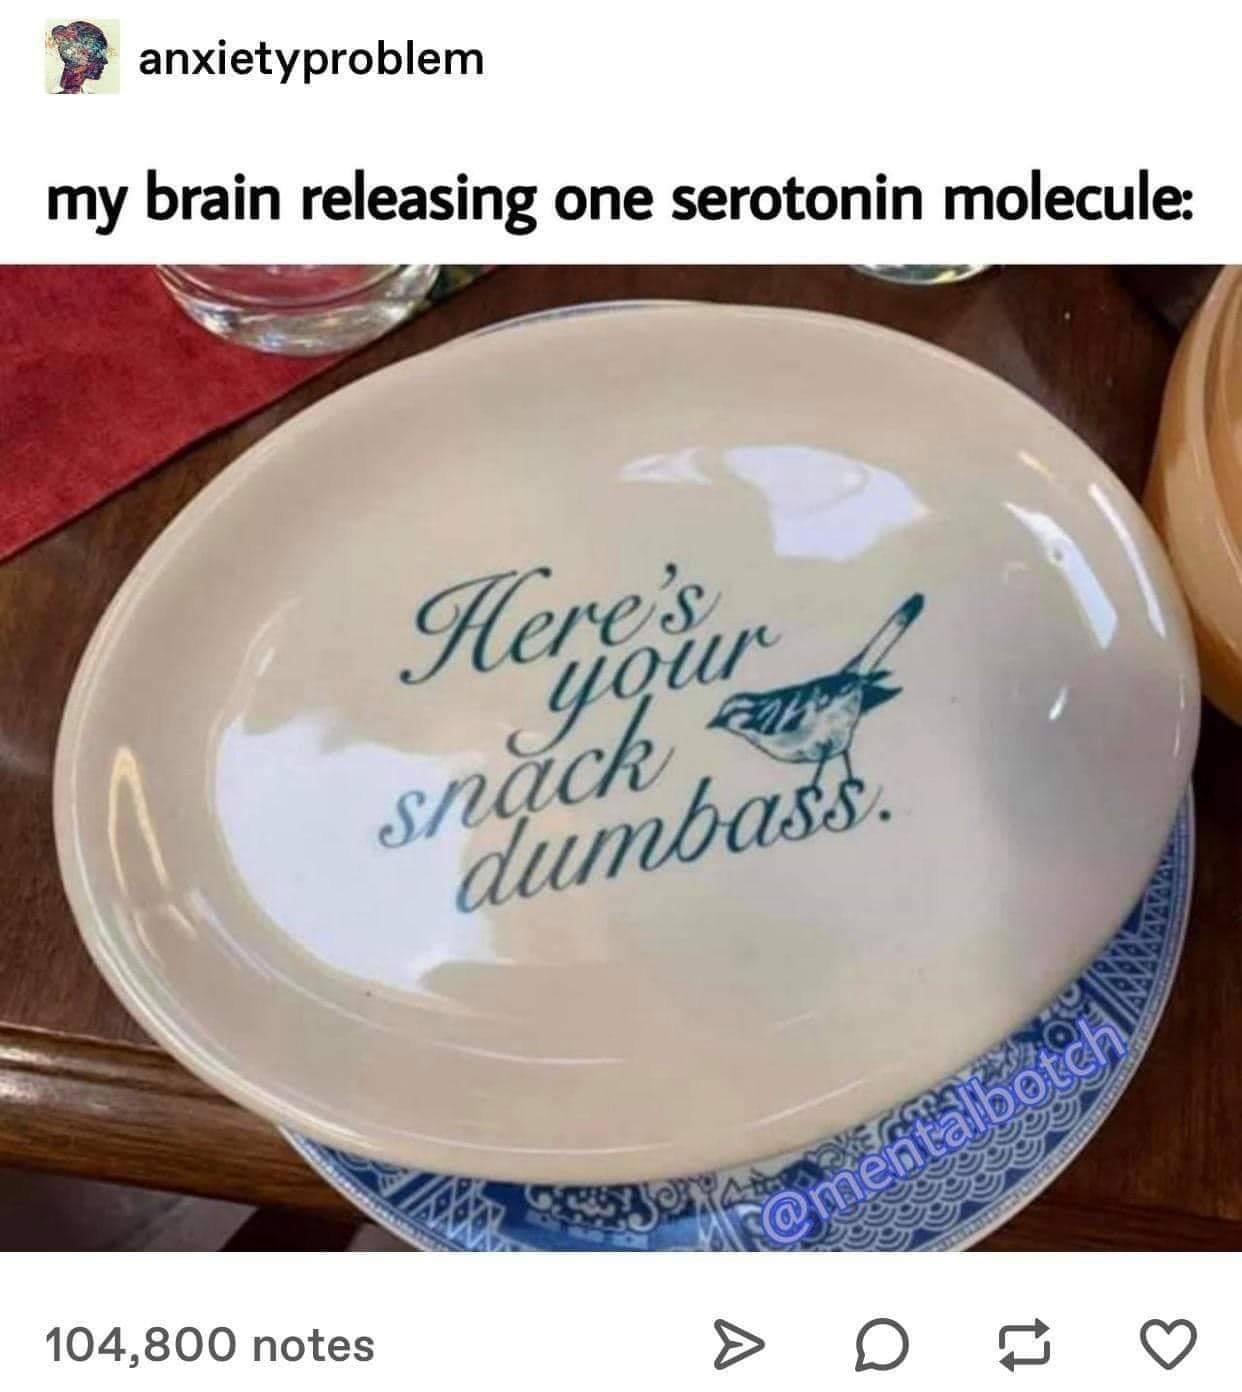 plate - anxietyproblem my brain releasing one serotonin molecule Hercourage a snack dumbass. komentlbotch 104,800 notes